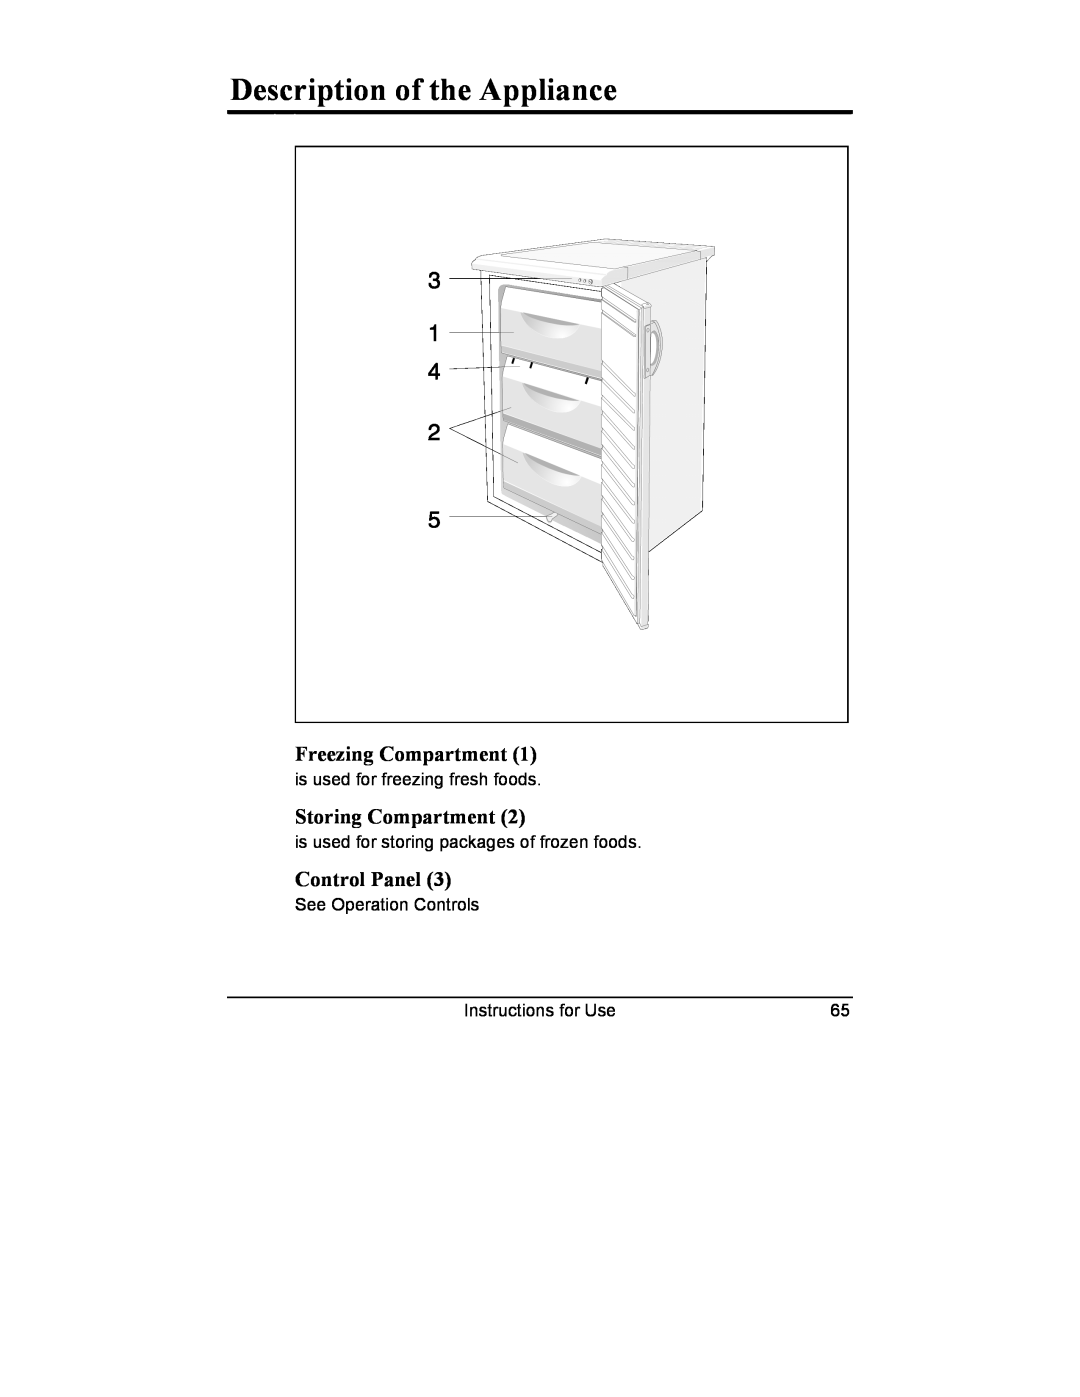 Smeg CV10B manual Description of the Appliance, Freezing Compartment, Storing Compartment, Control Panel 